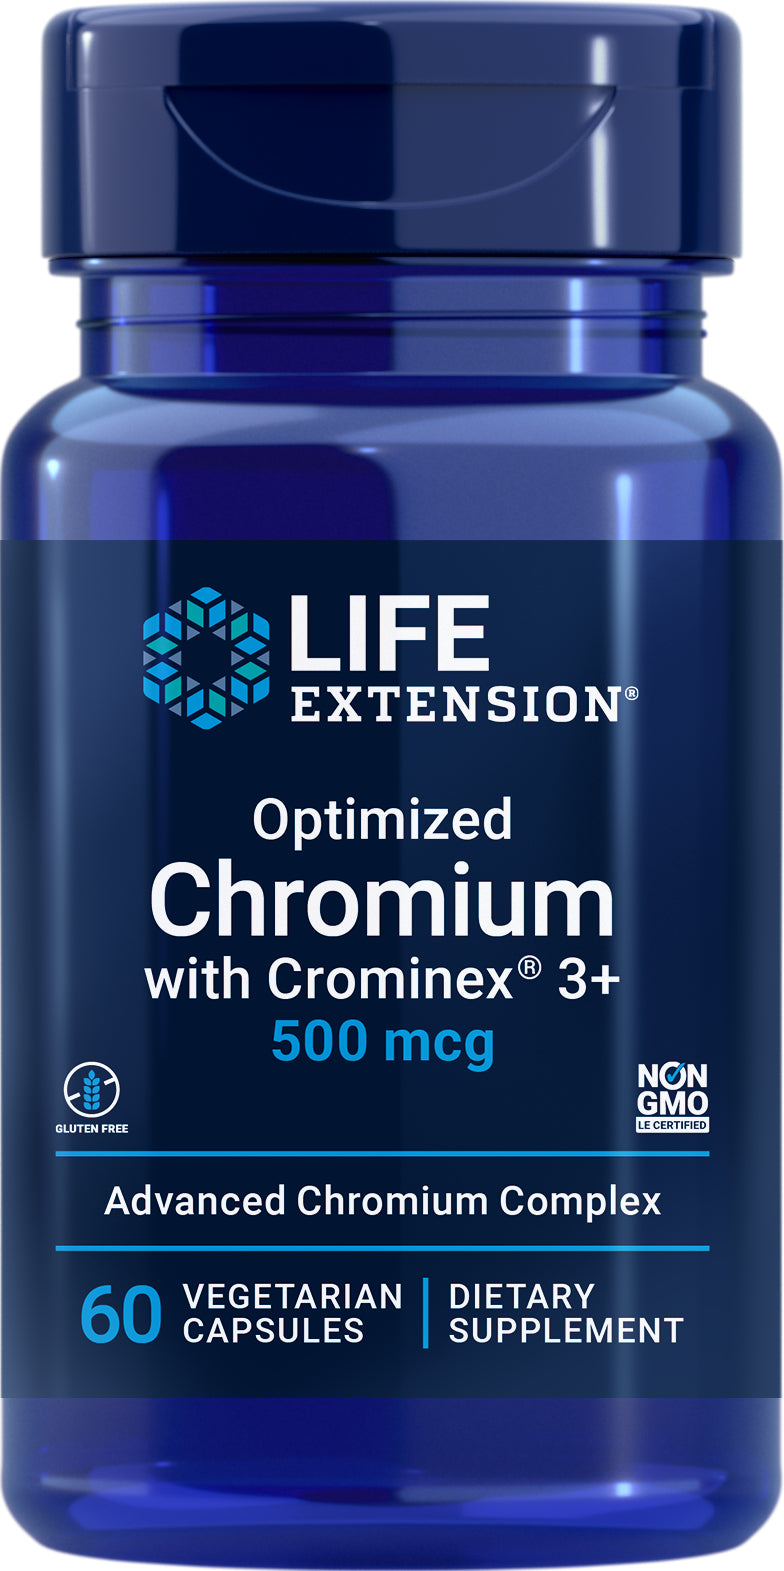 Optimized Chromium with Crominex® 3+500 mcg, 60 veg caps by Life Extension